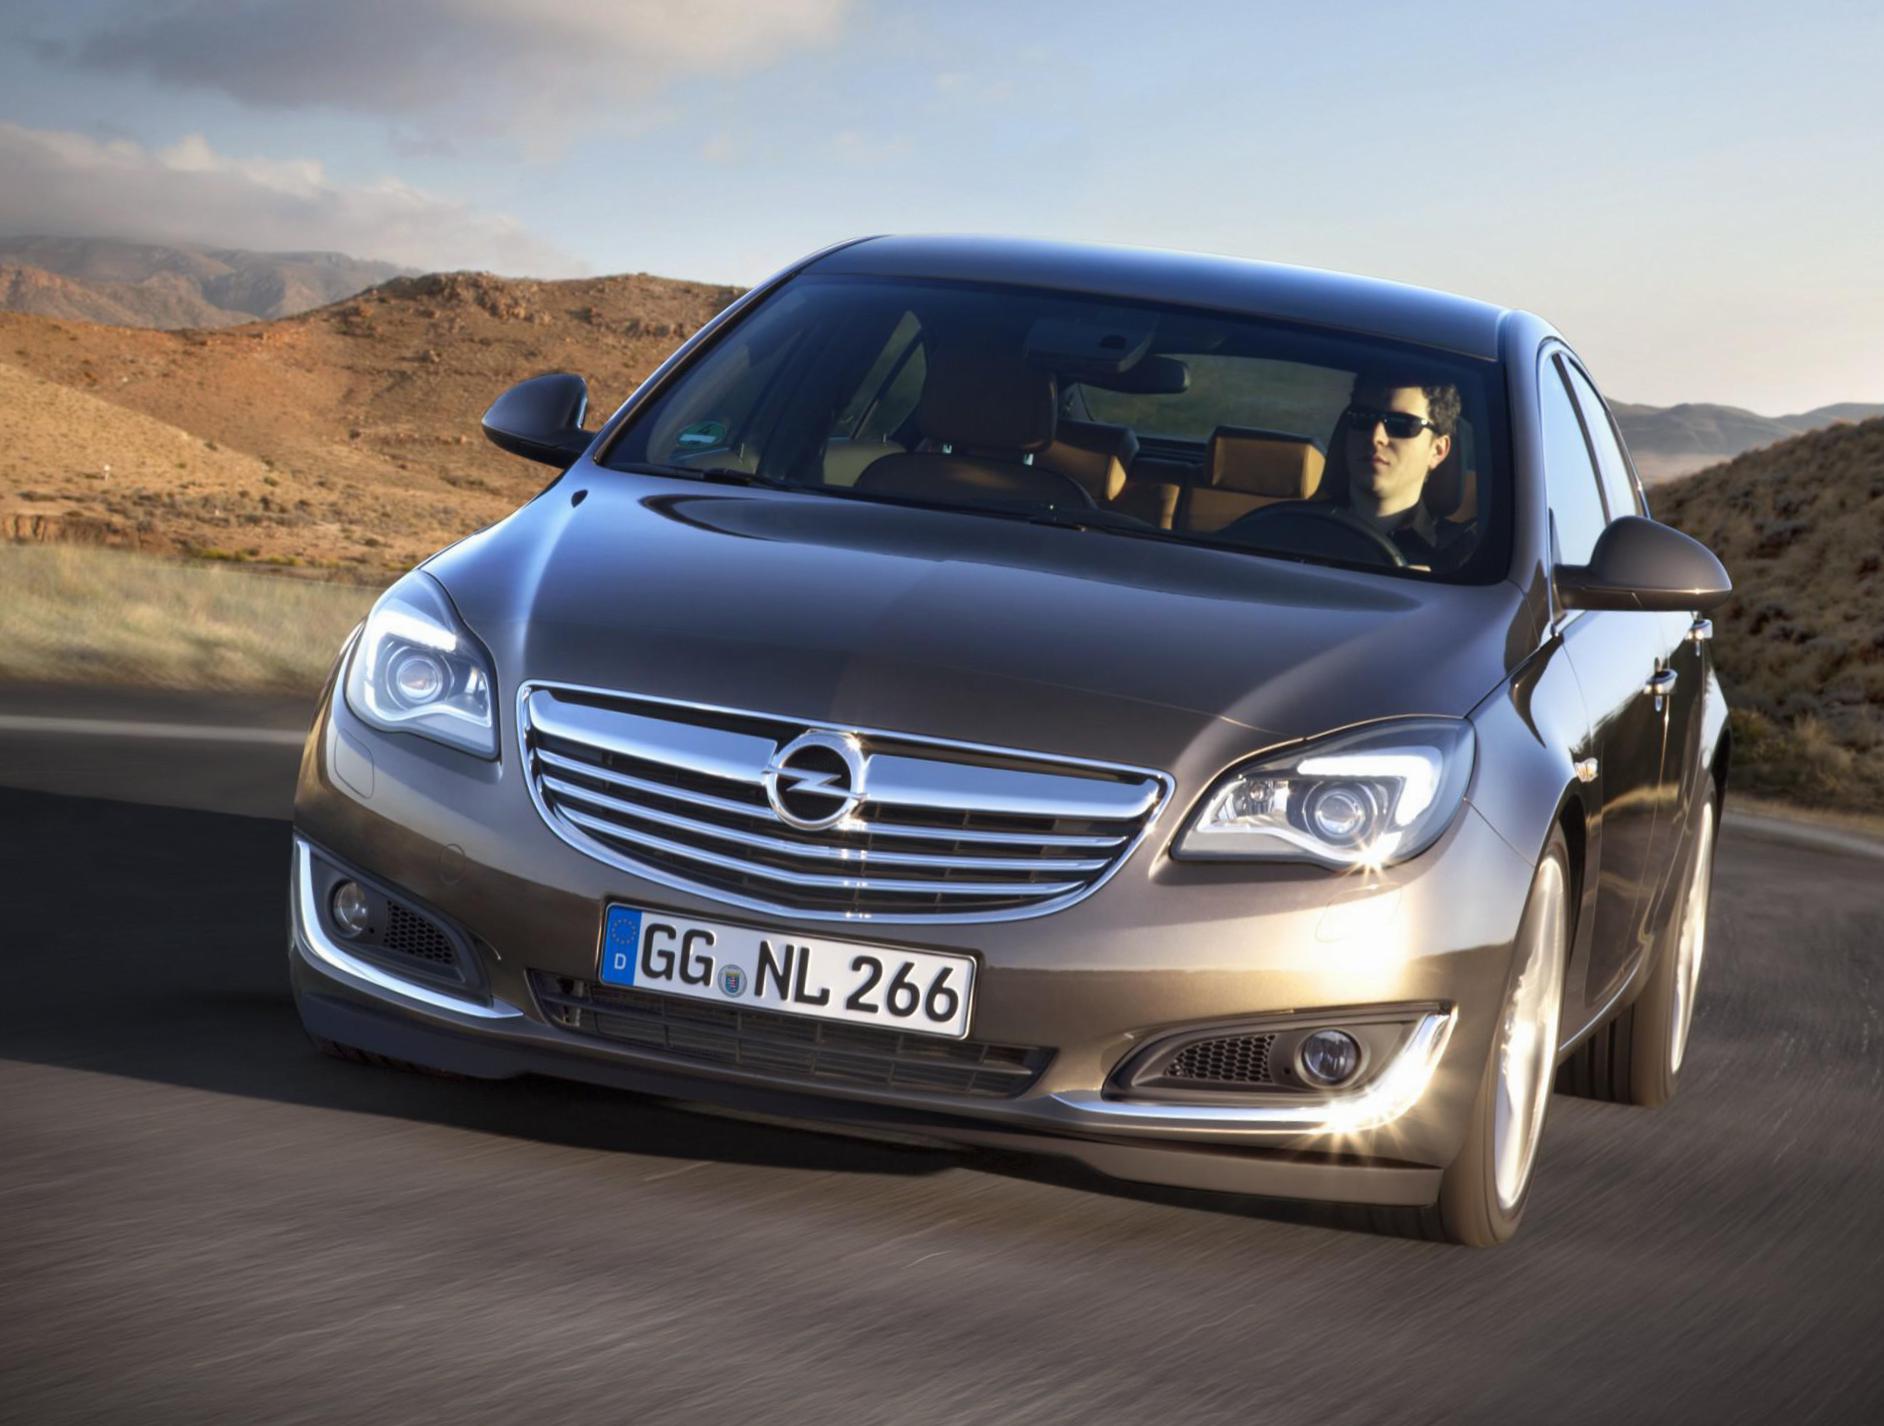 Opel Insignia Hatchback price suv